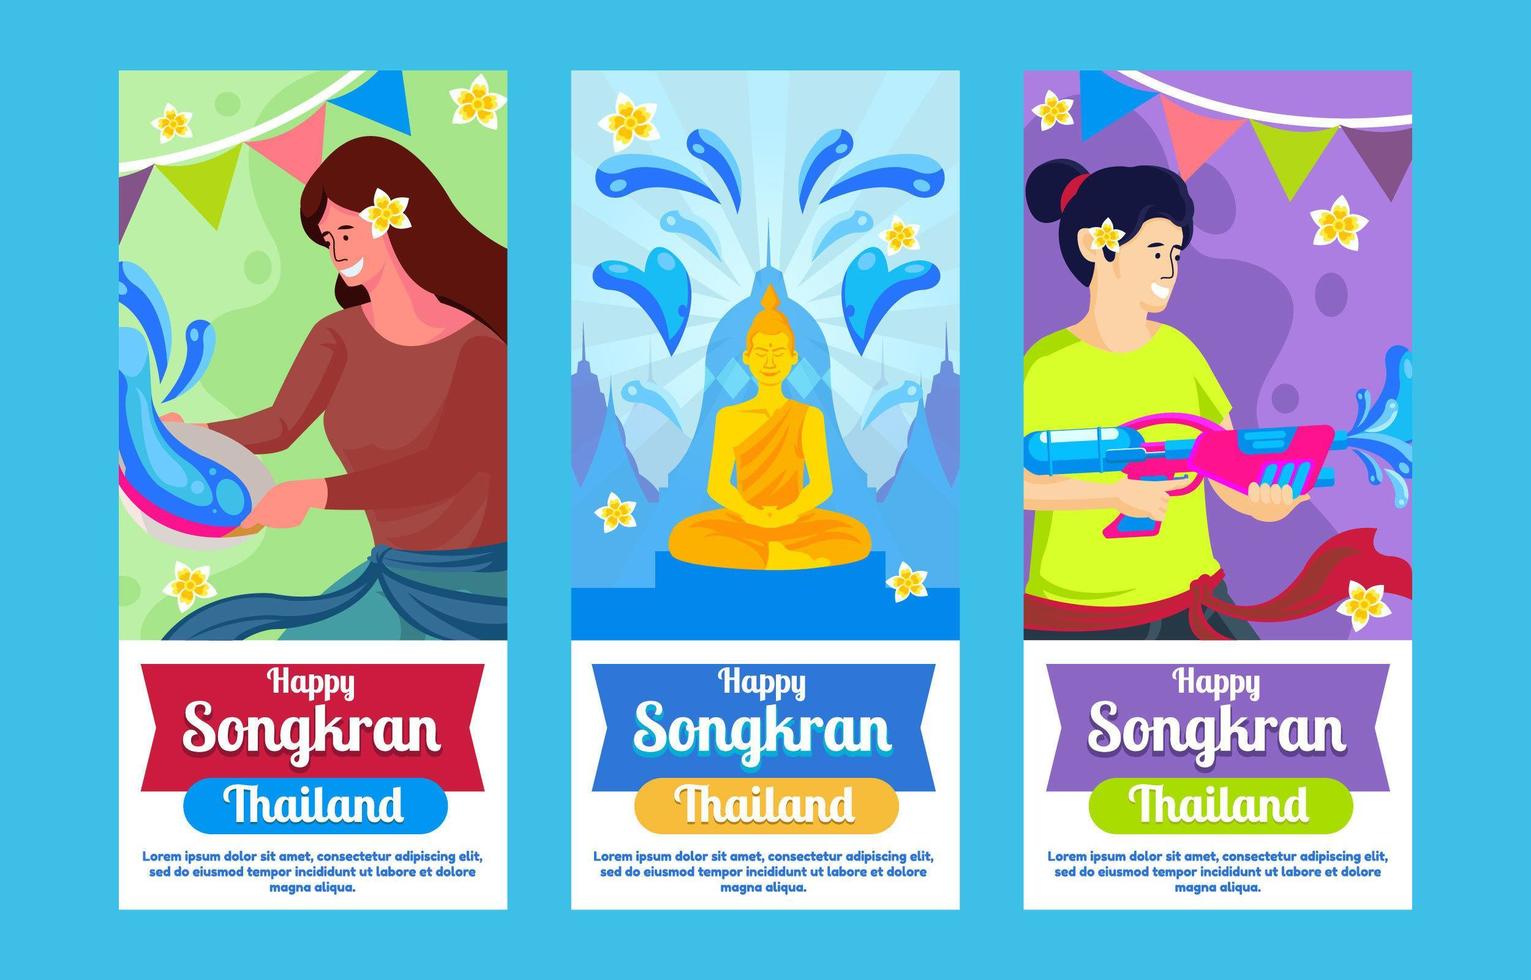 conjunto de banners de eventos de celebración de songkran vector